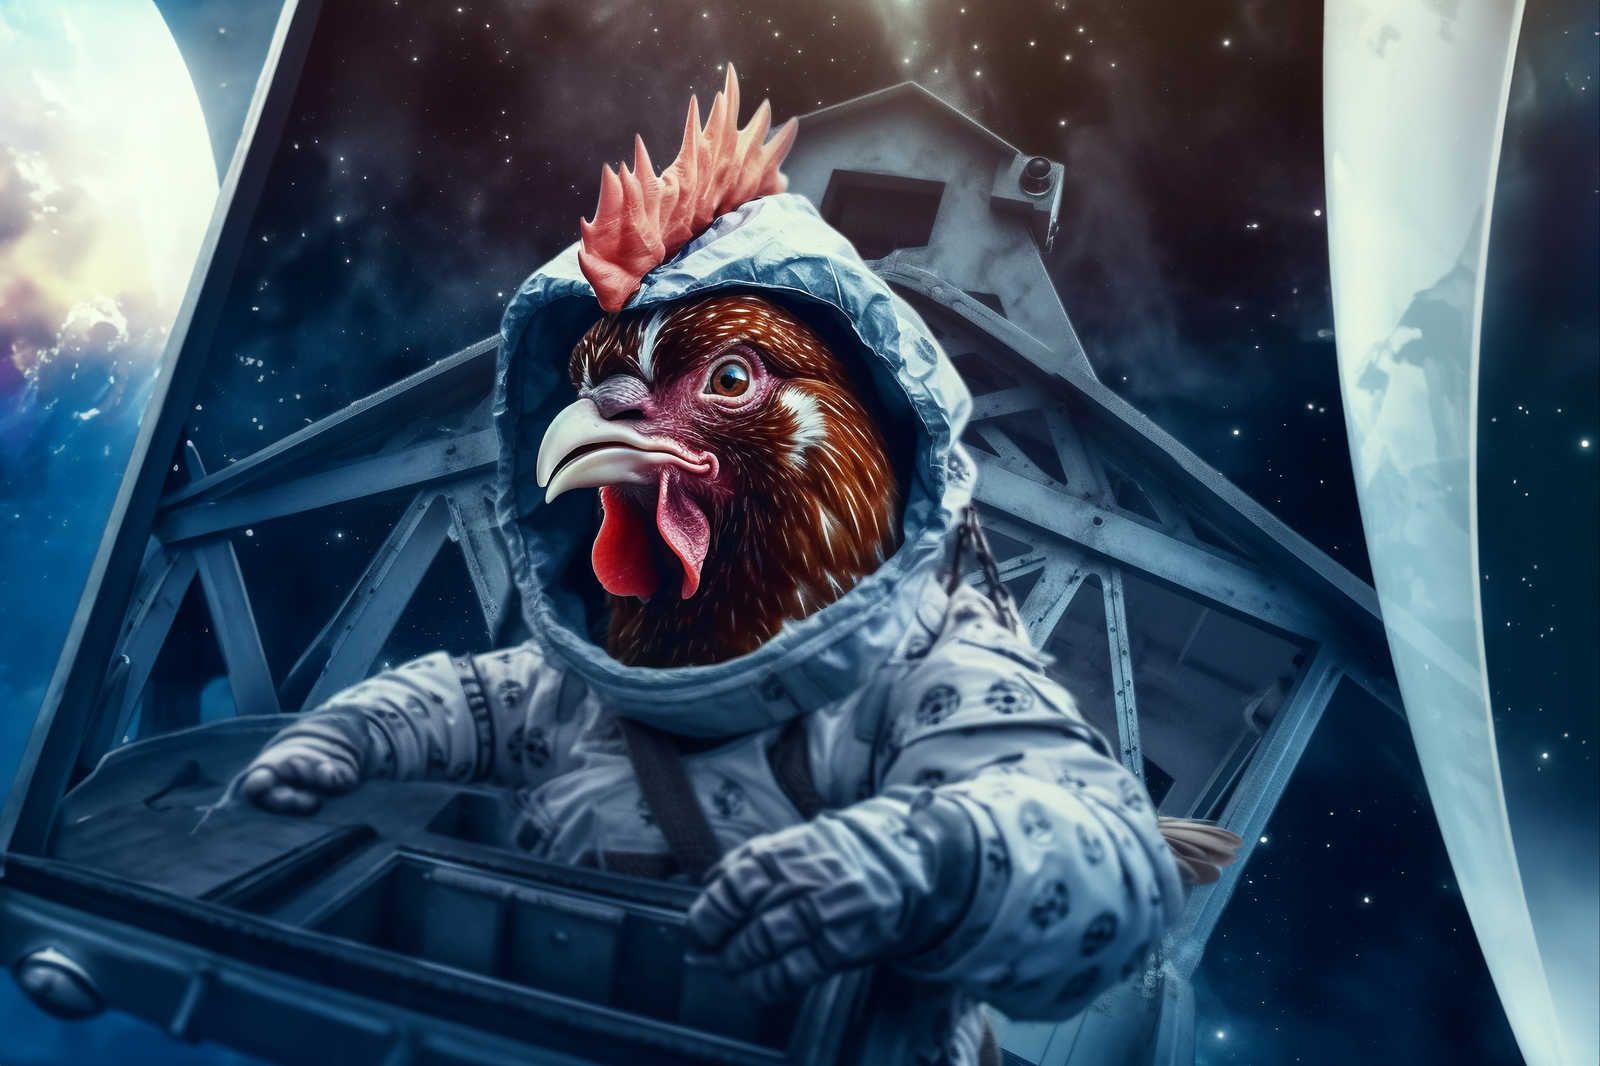             KI-Leinwandbild »Space Chicken« – 90 cm x 60 cm
        